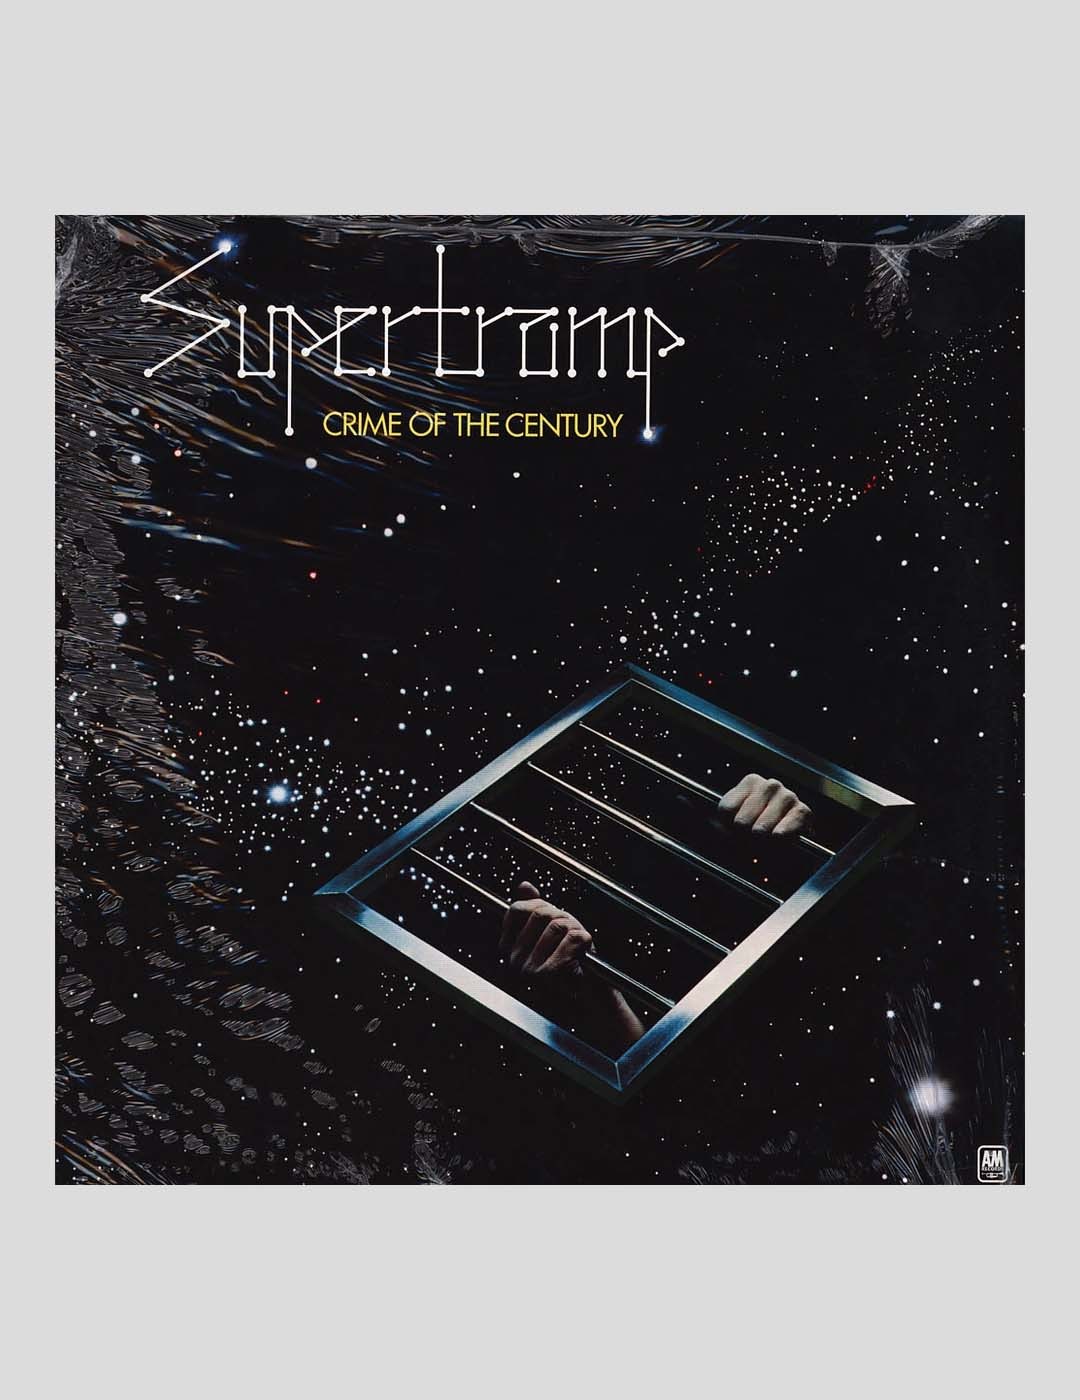 Las mejores ofertas en Discos de vinilo LP doble Supertramp